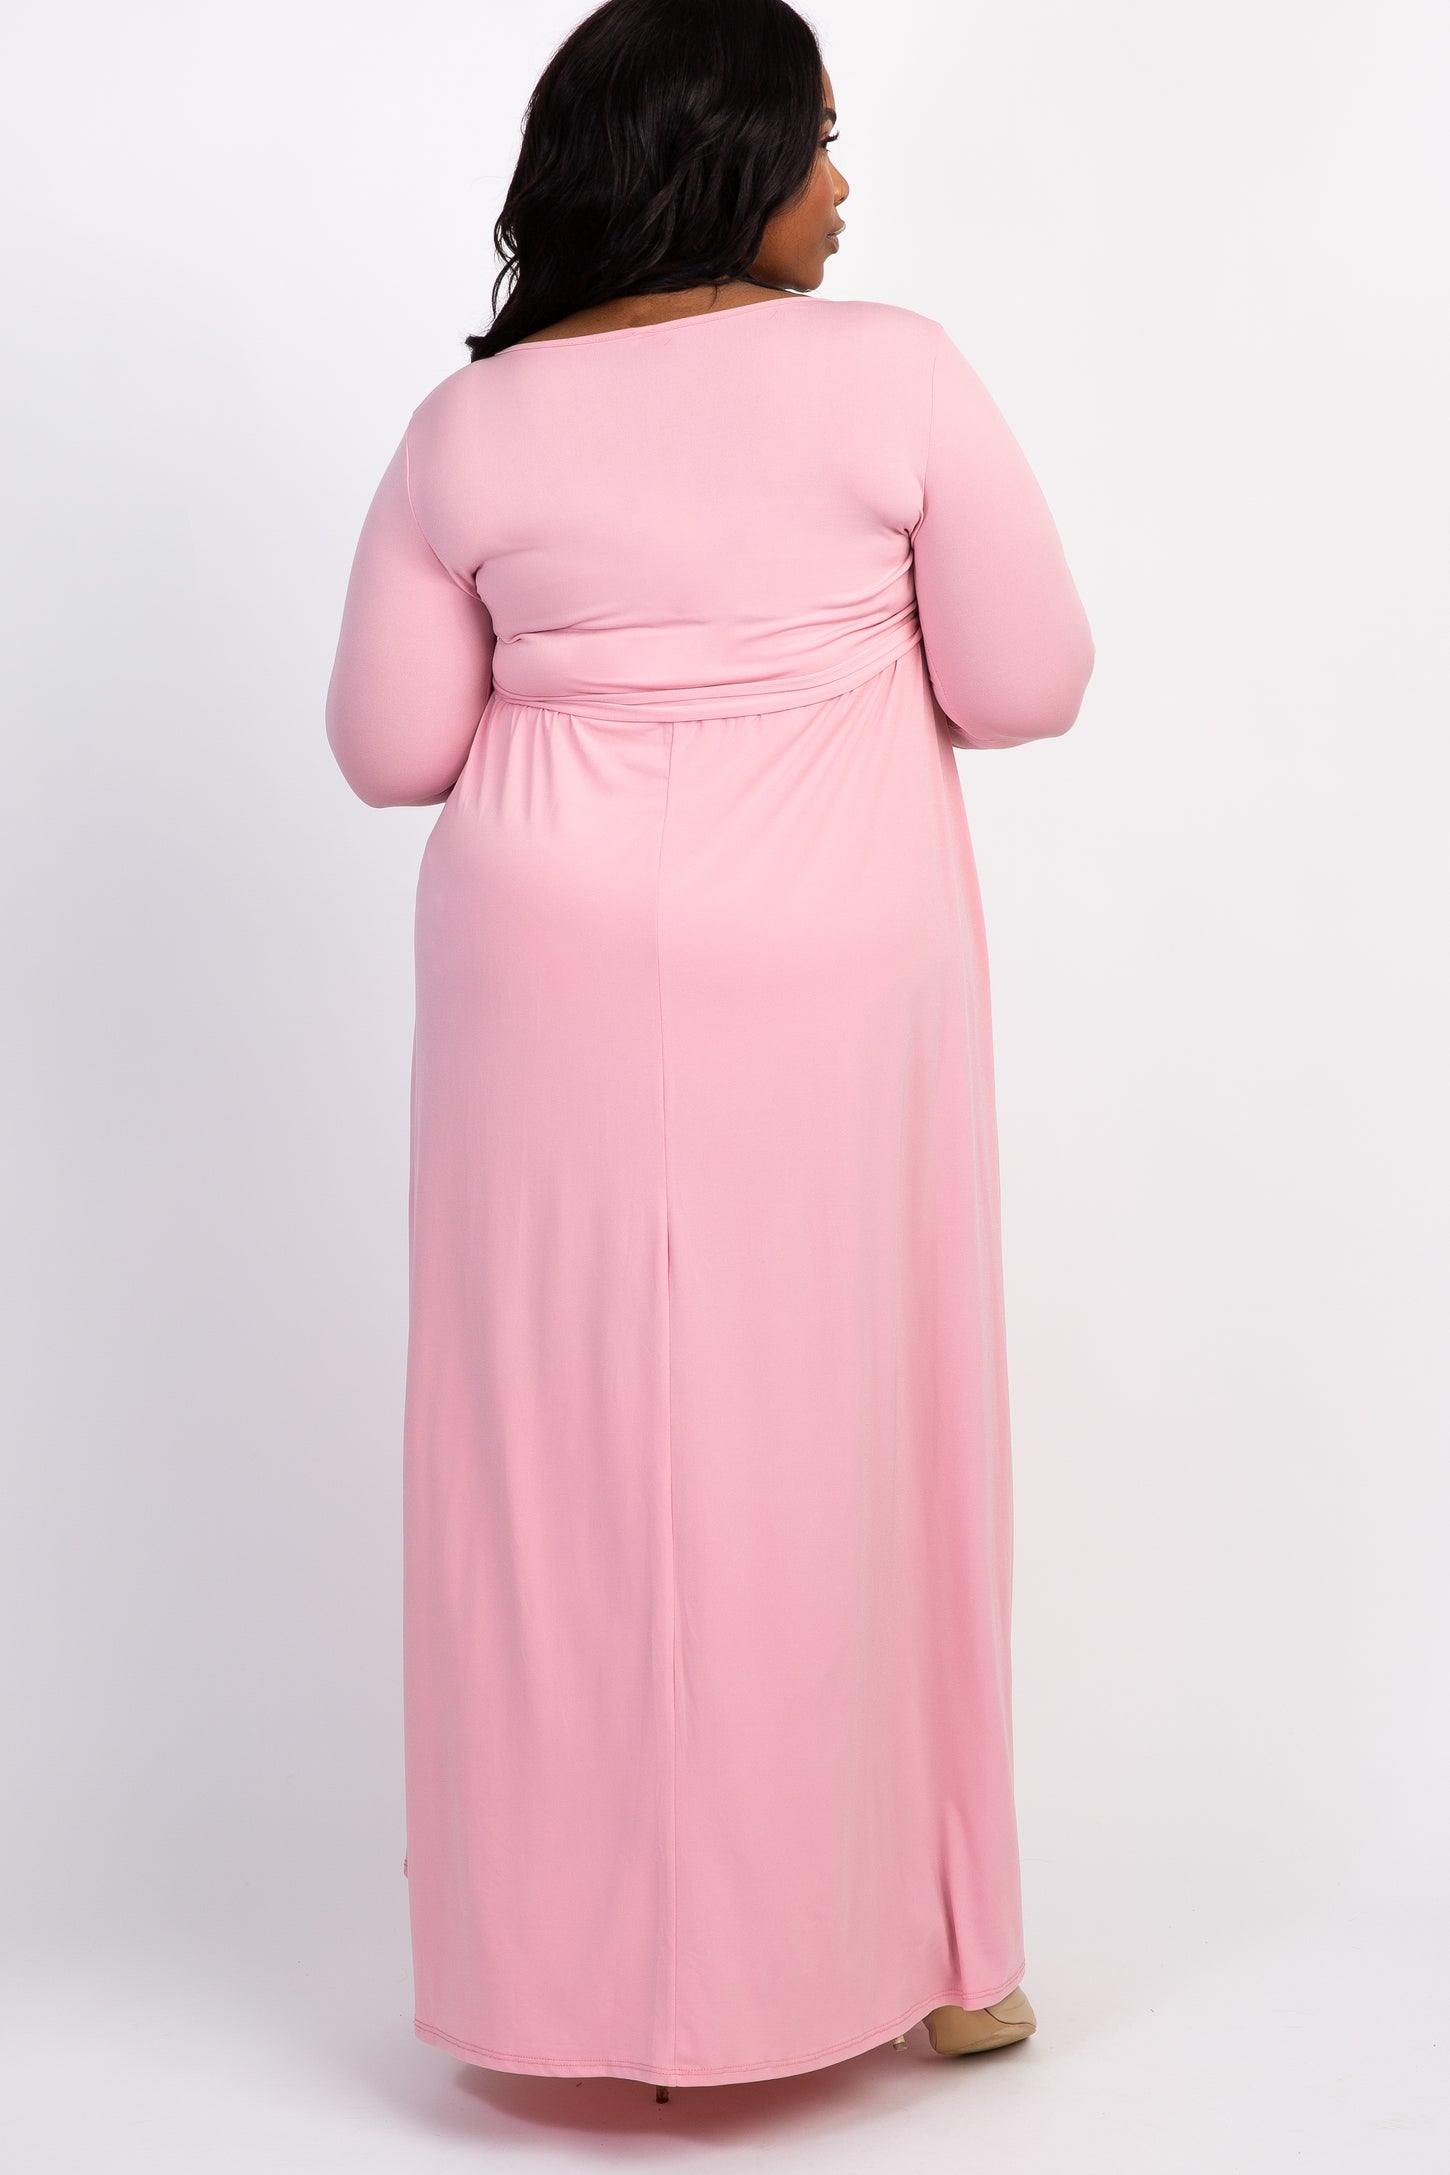 PinkBlush Pink Sash Tie Wrap Plus Maxi Dress